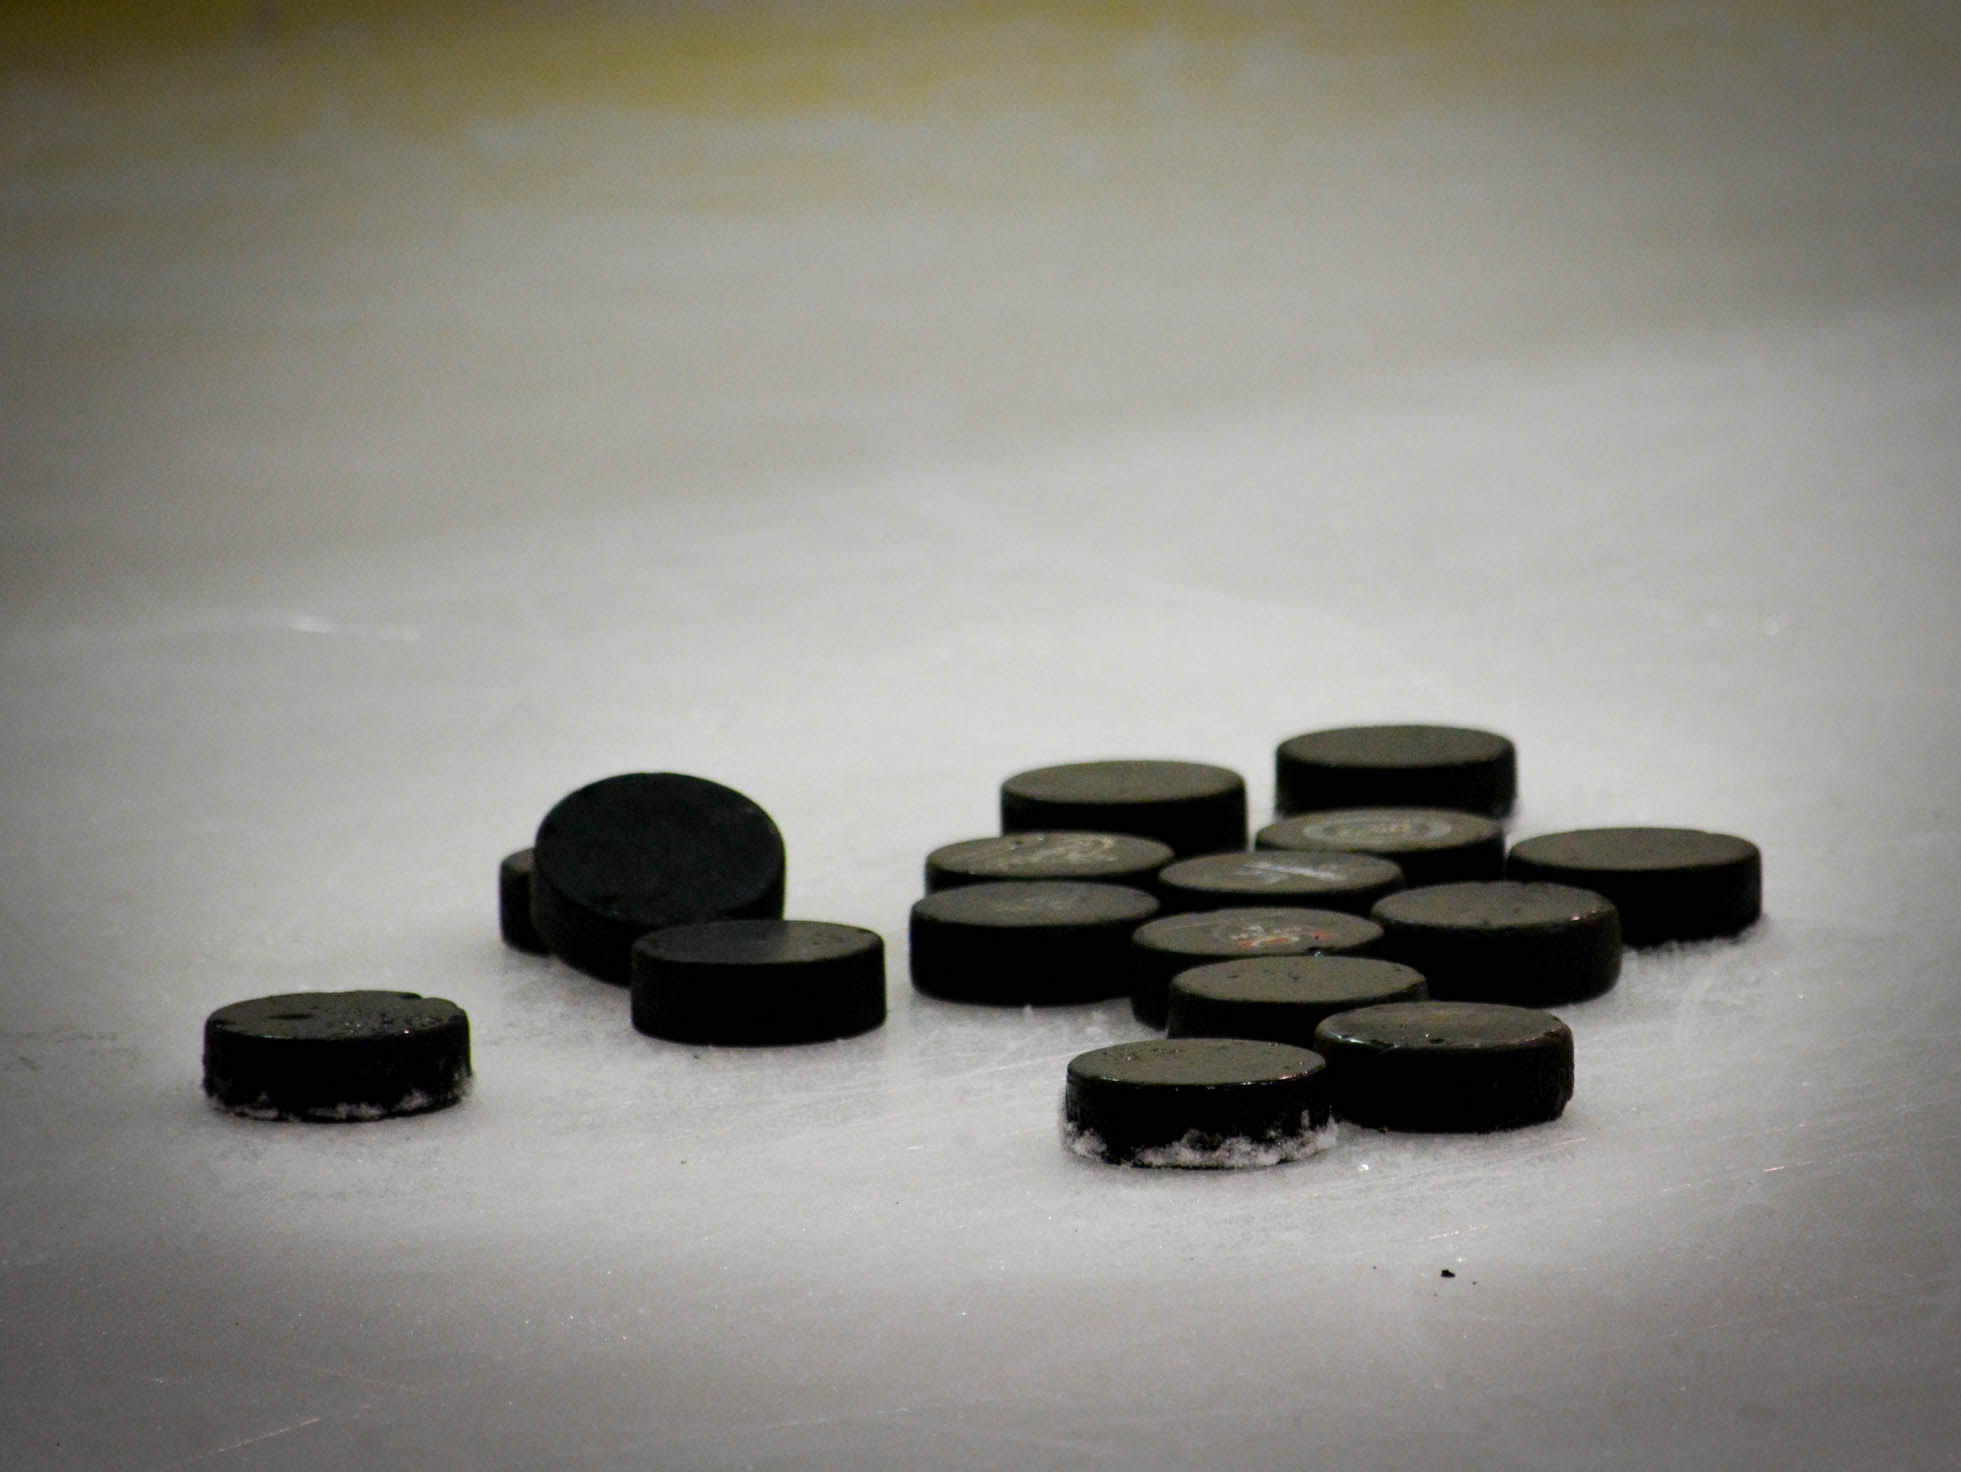 Hockey pucks on the ice.